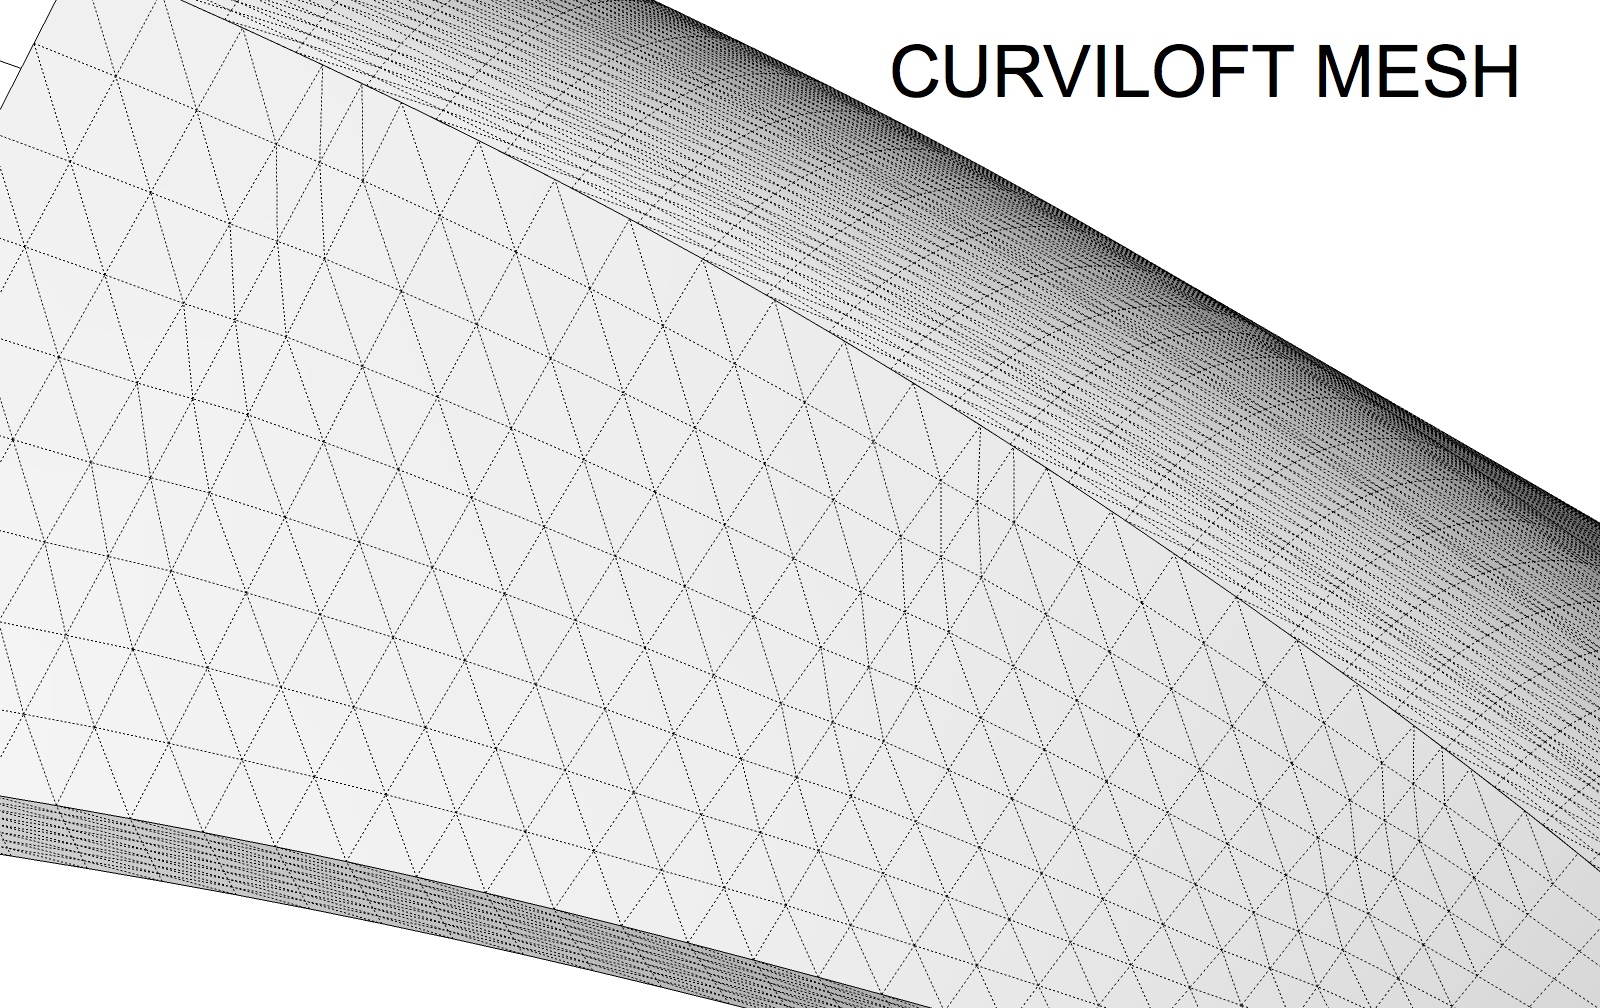 curviloft mesh2.jpg